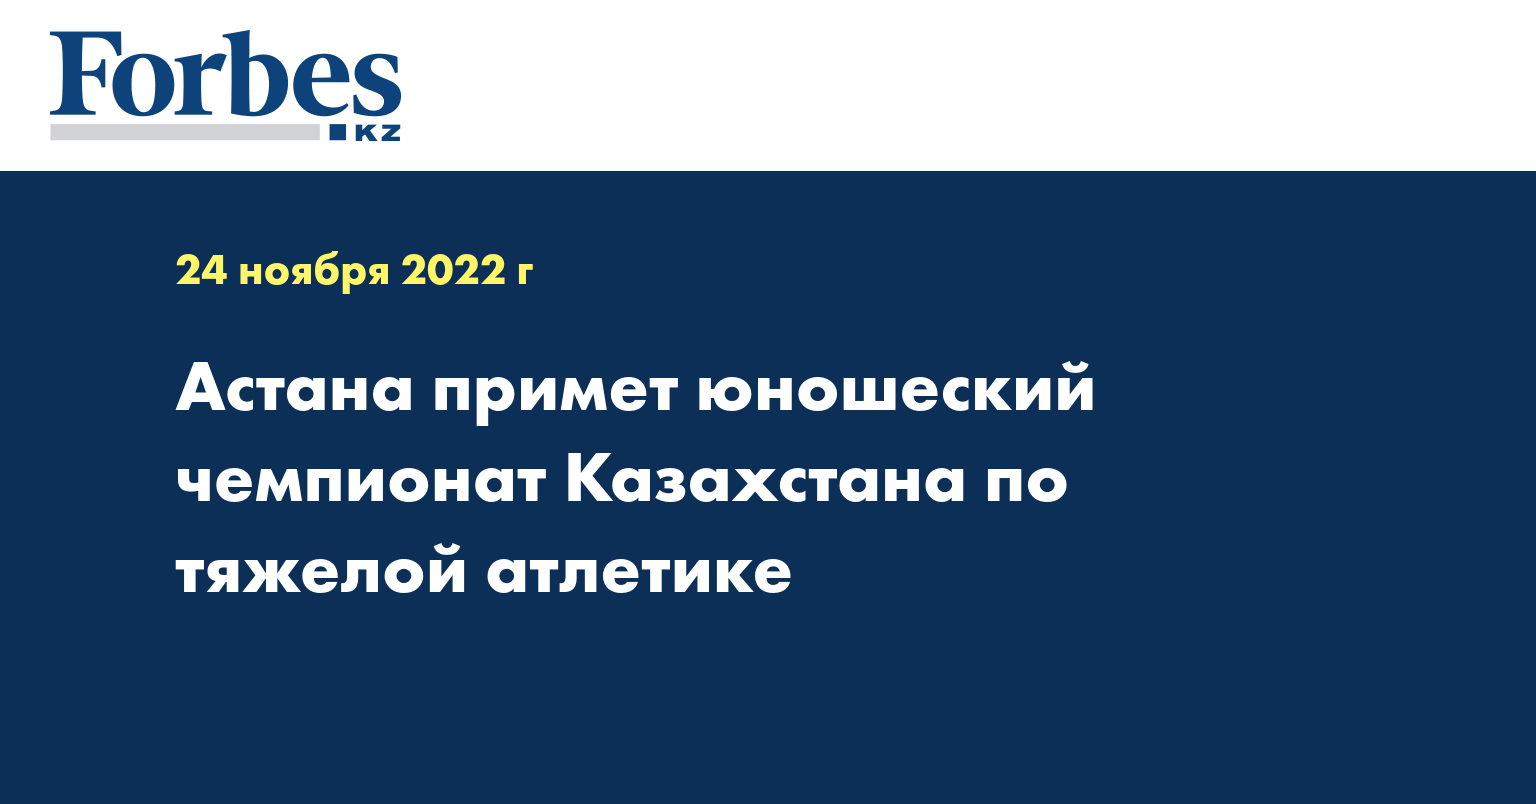 Астана примет юношеский чемпионат Казахстана по тяжелой атлетике